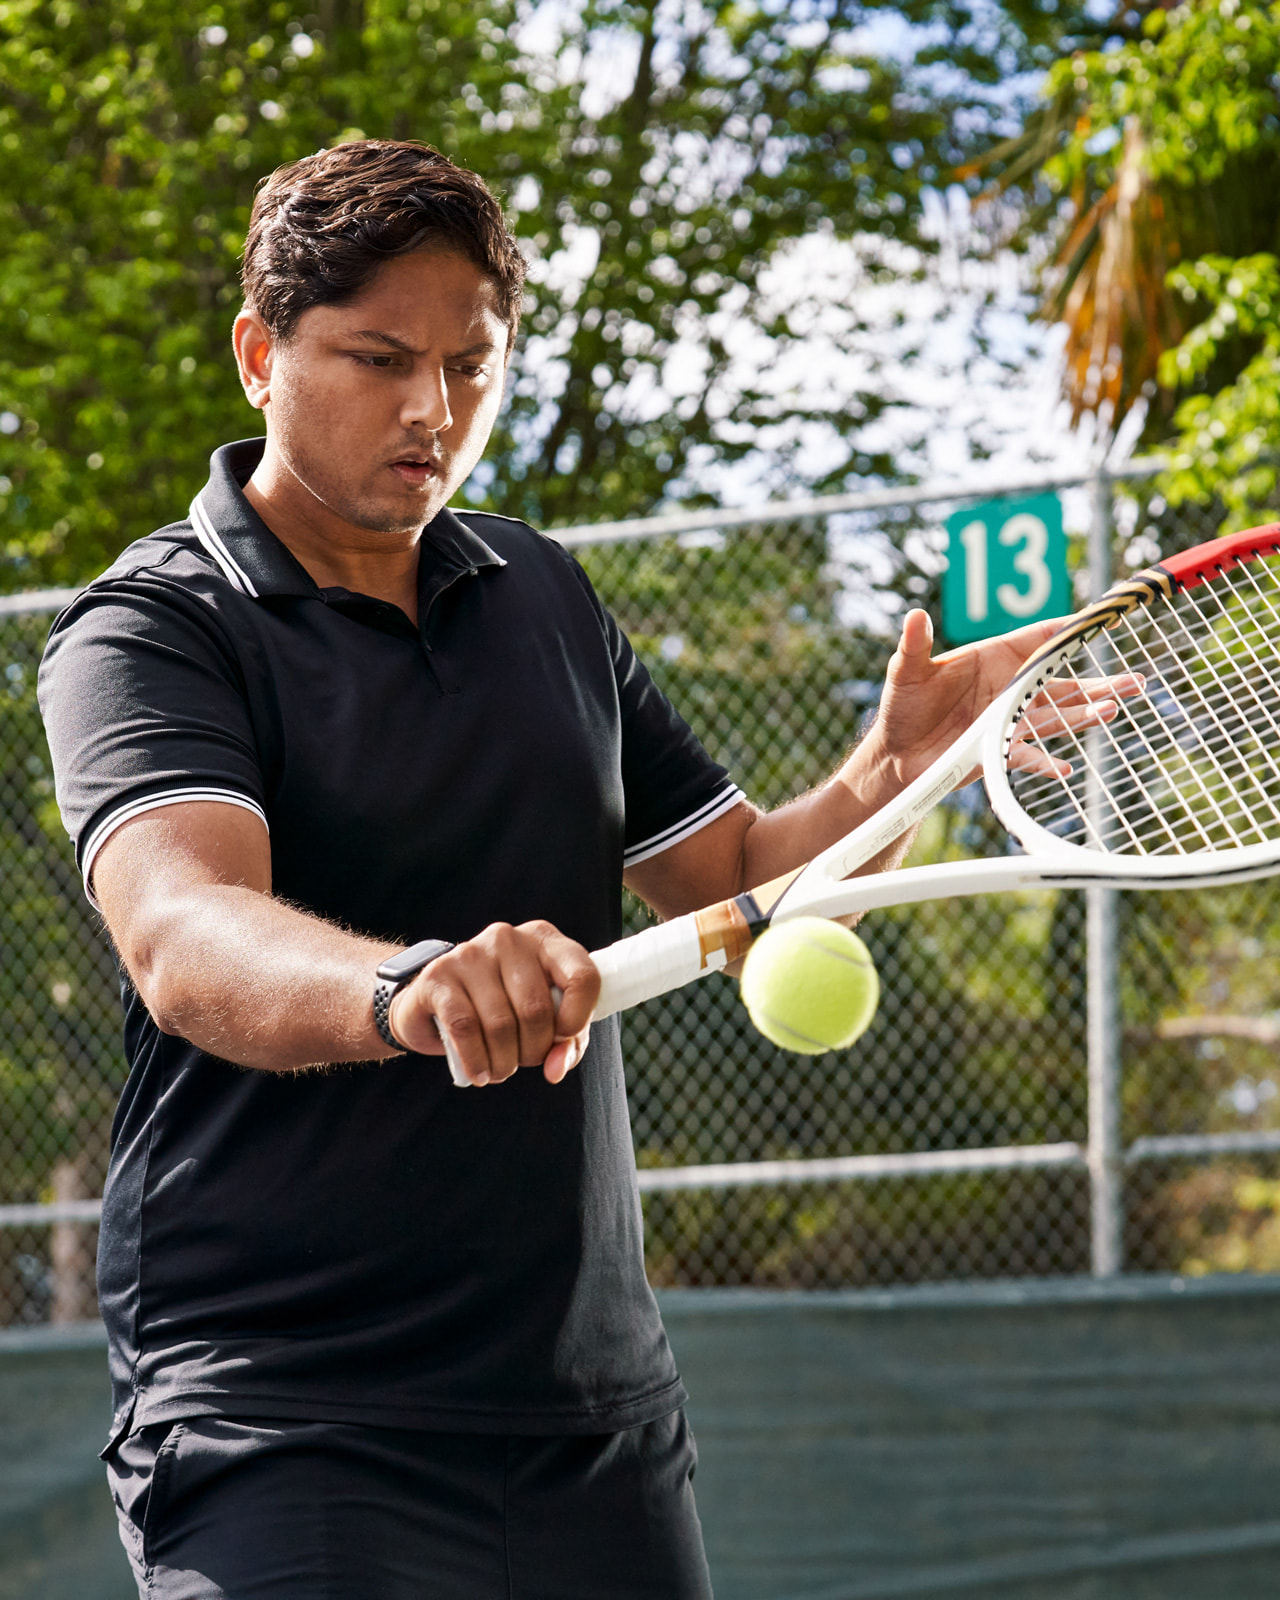 Sahai 在球場上反手擊打網球。